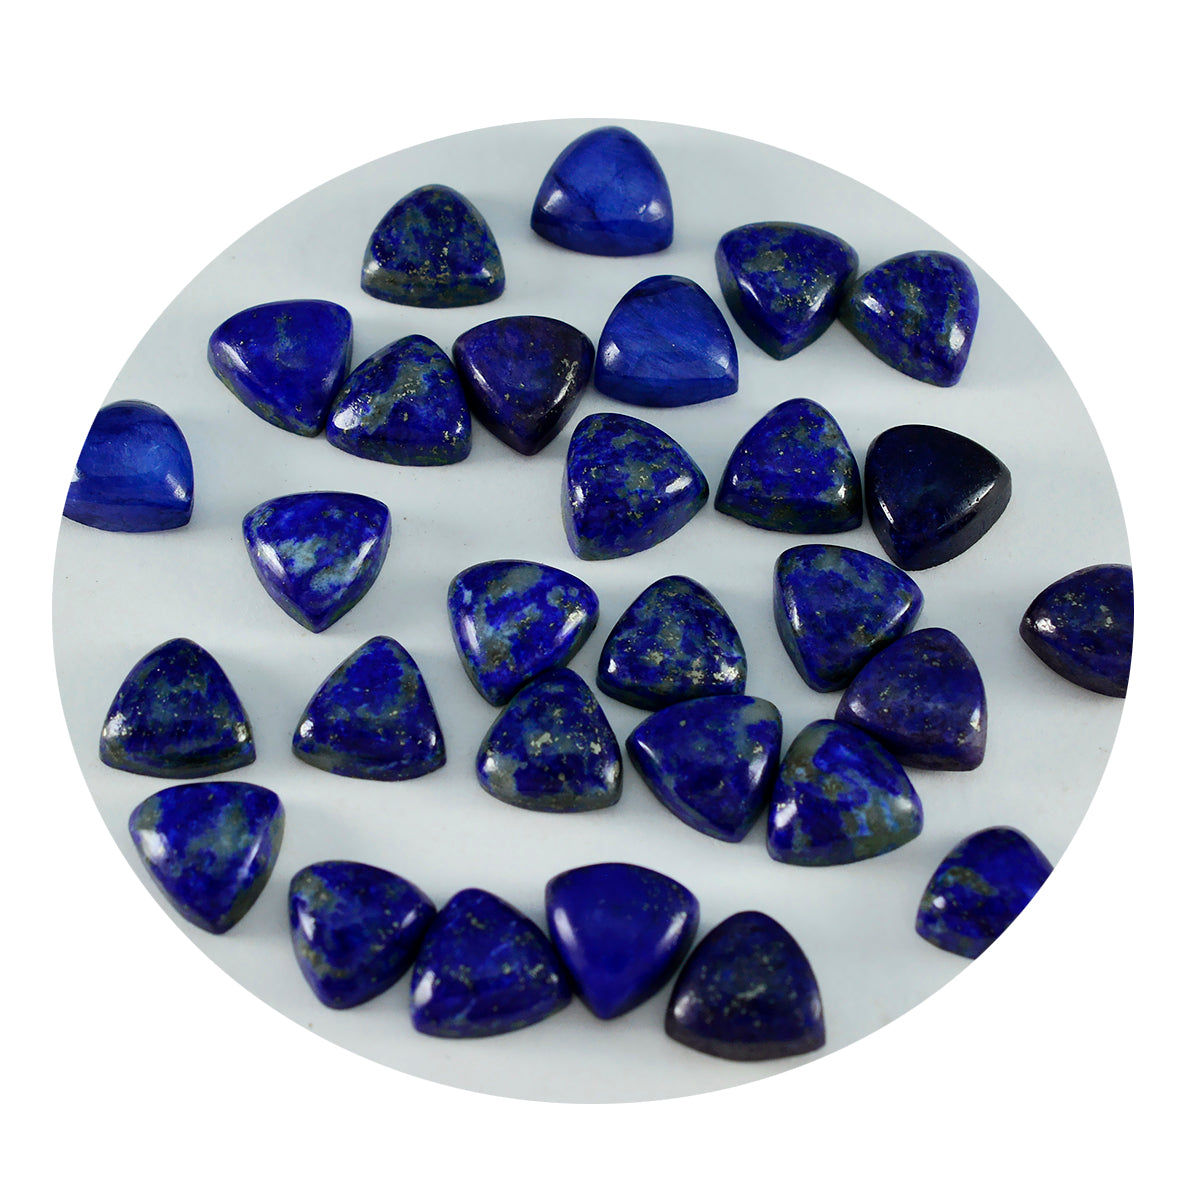 Riyogems 1PC Blauwe Lapis Lazuli Cabochon 7x7 mm Biljoen Vorm aantrekkelijke Kwaliteit Losse Steen